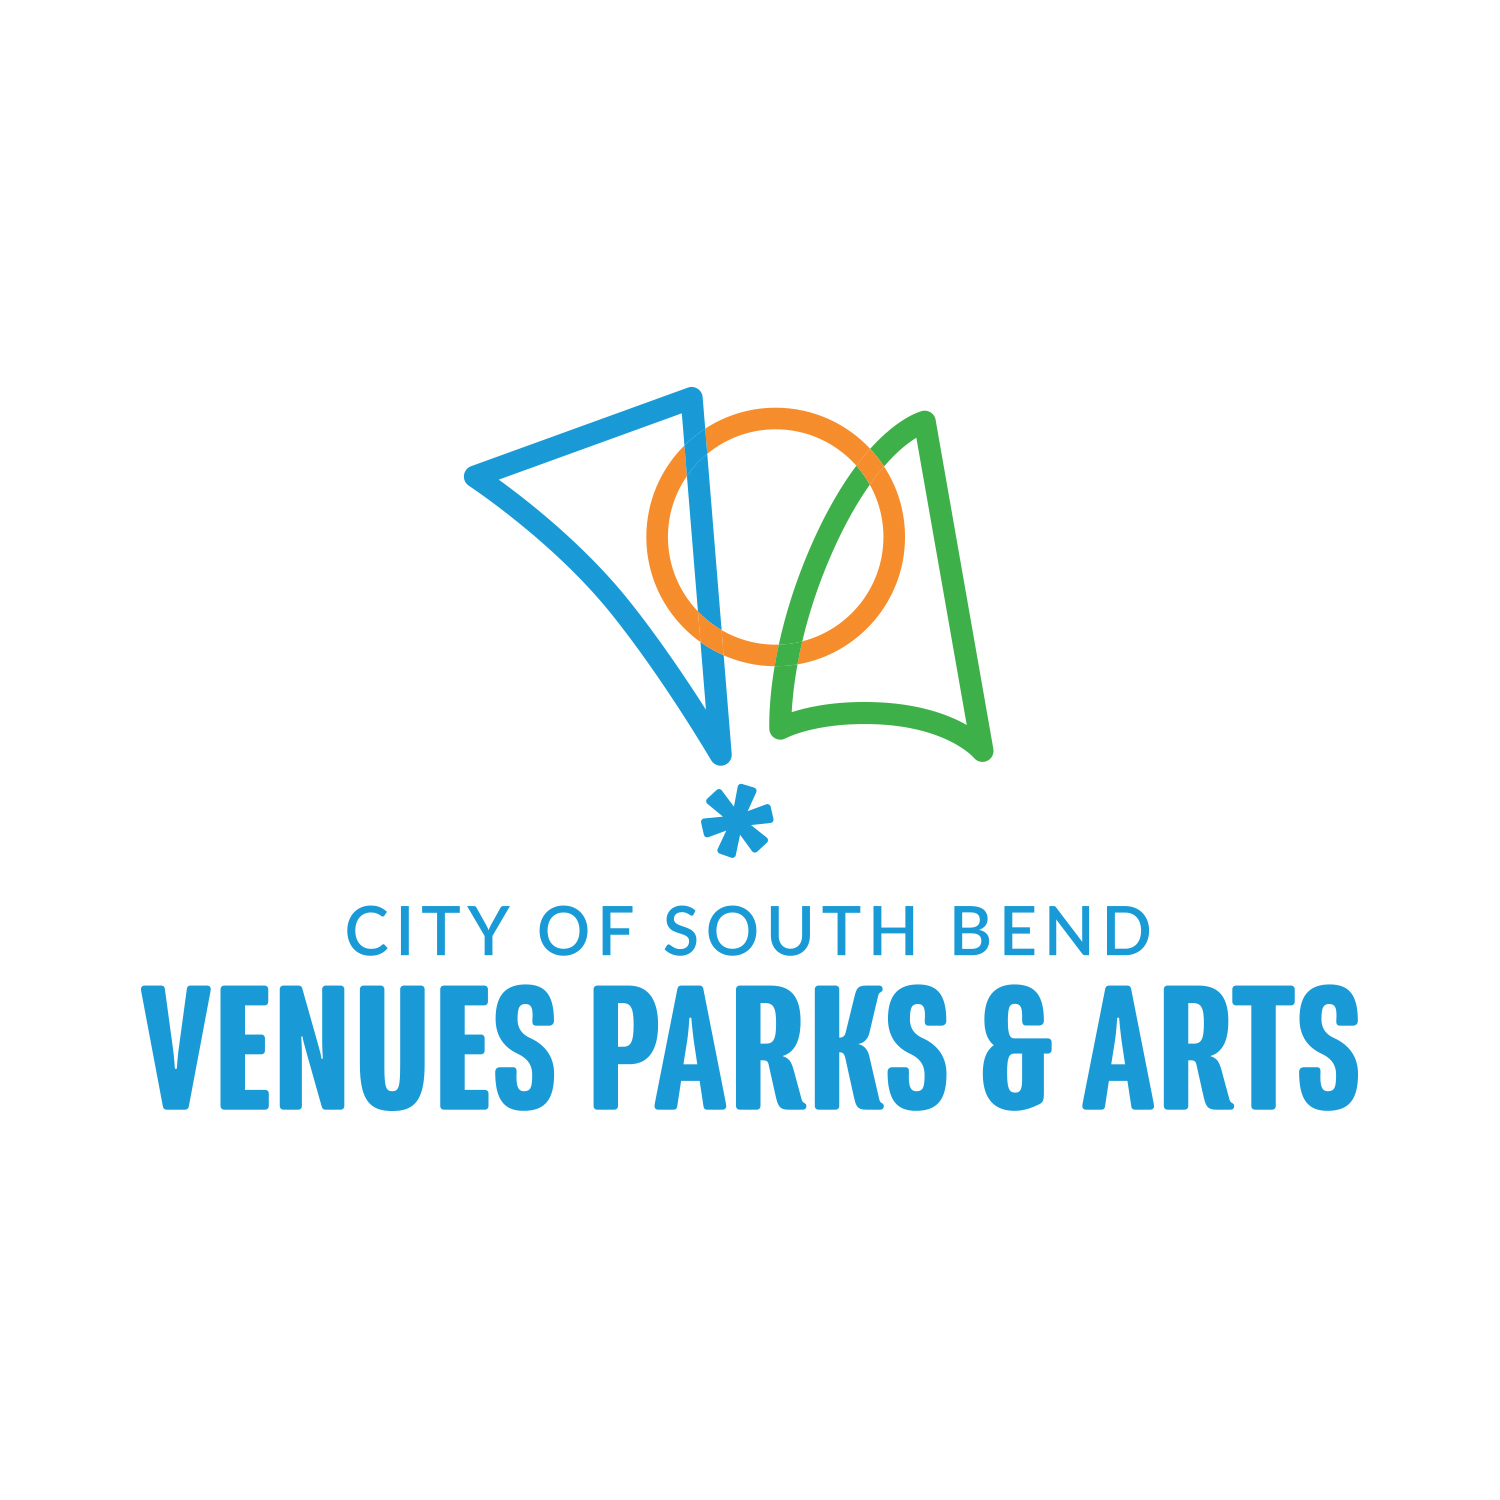 Venues Parks & Arts